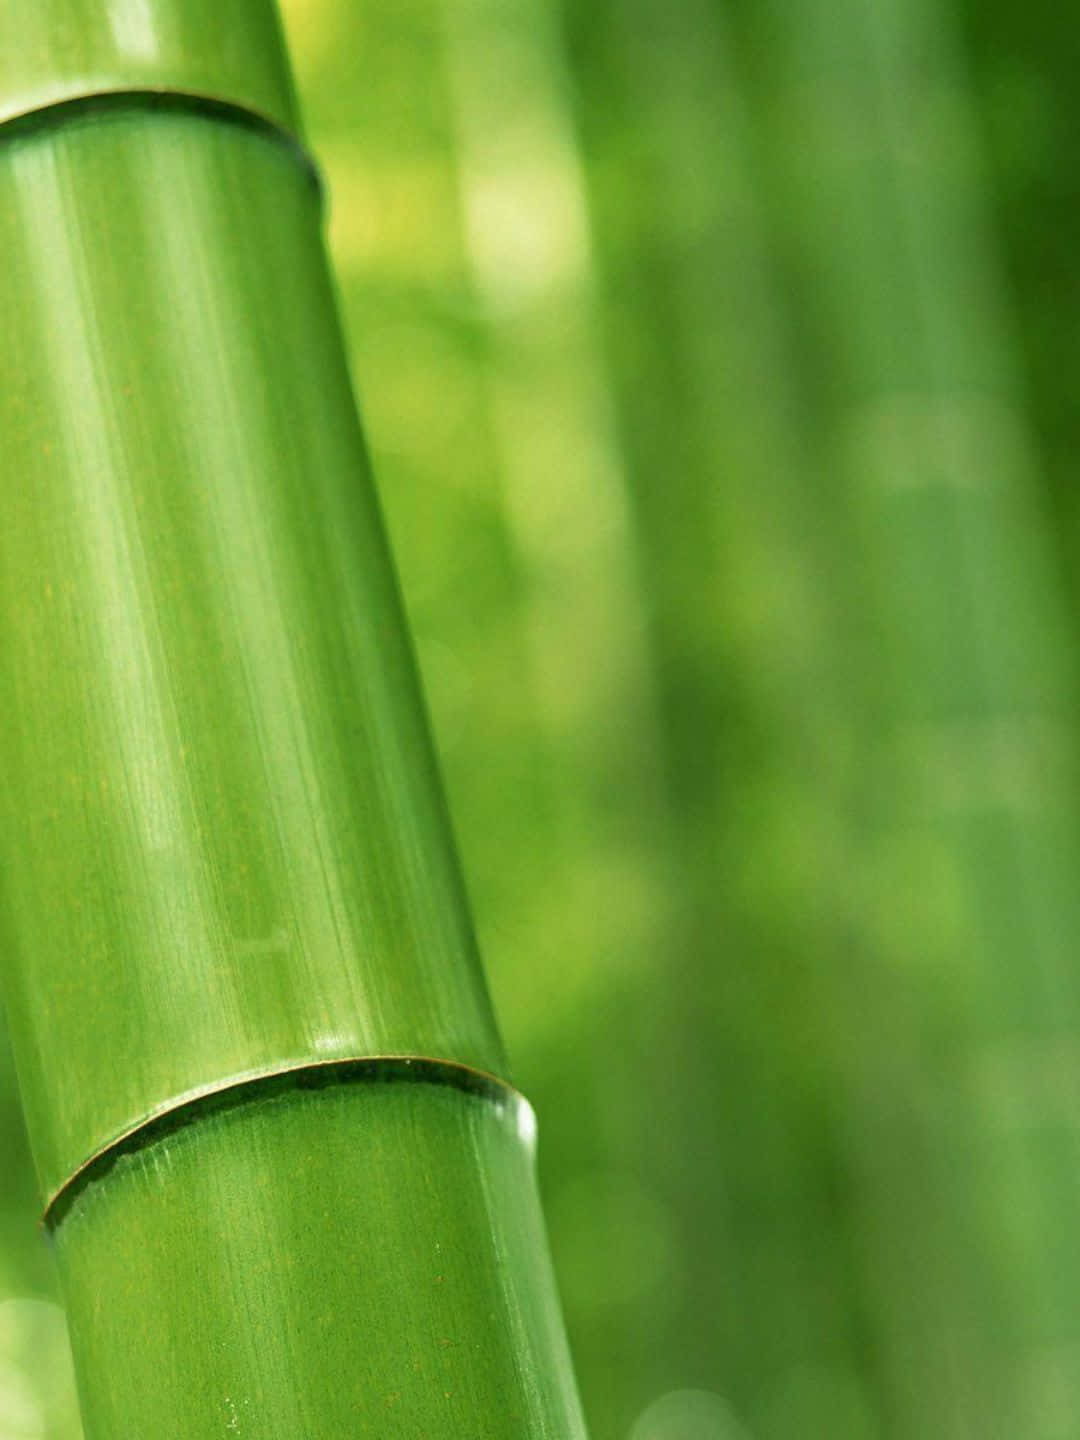 1440p Bamboo Background Reflective Bamboo Stem